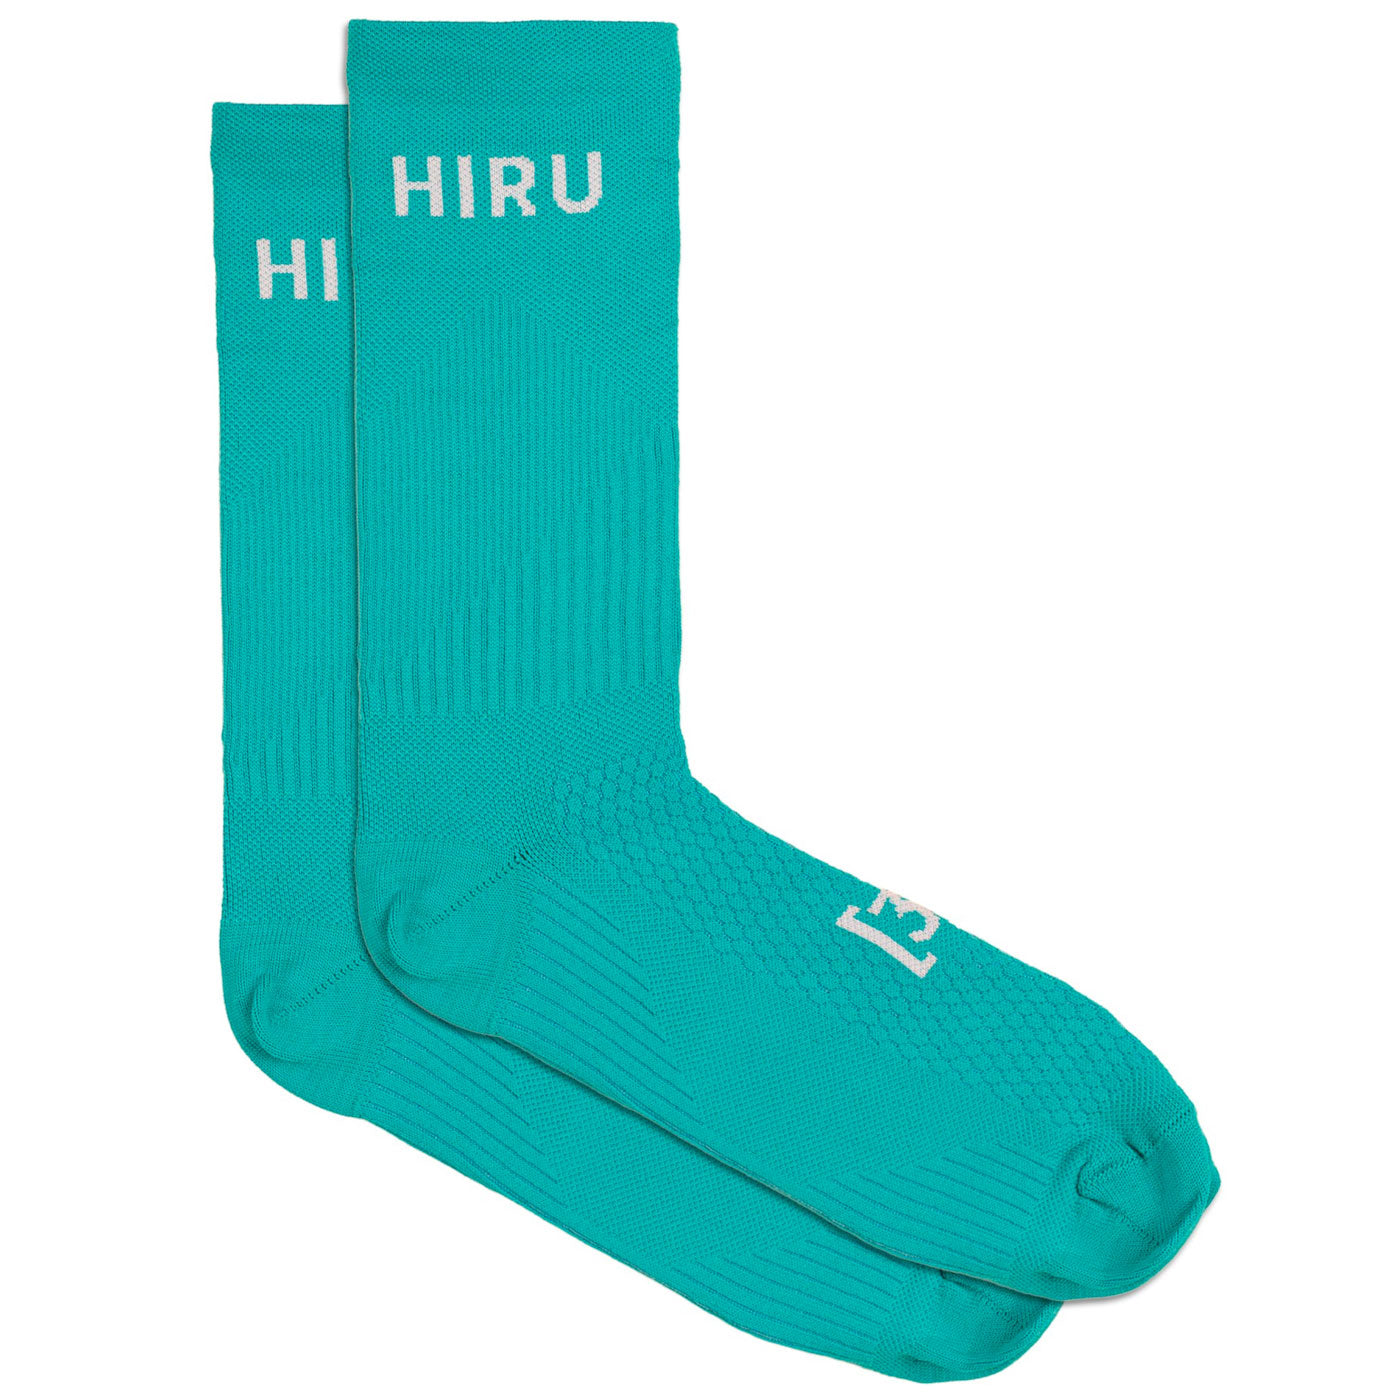 Hiru Qskin Socken - Hellblau